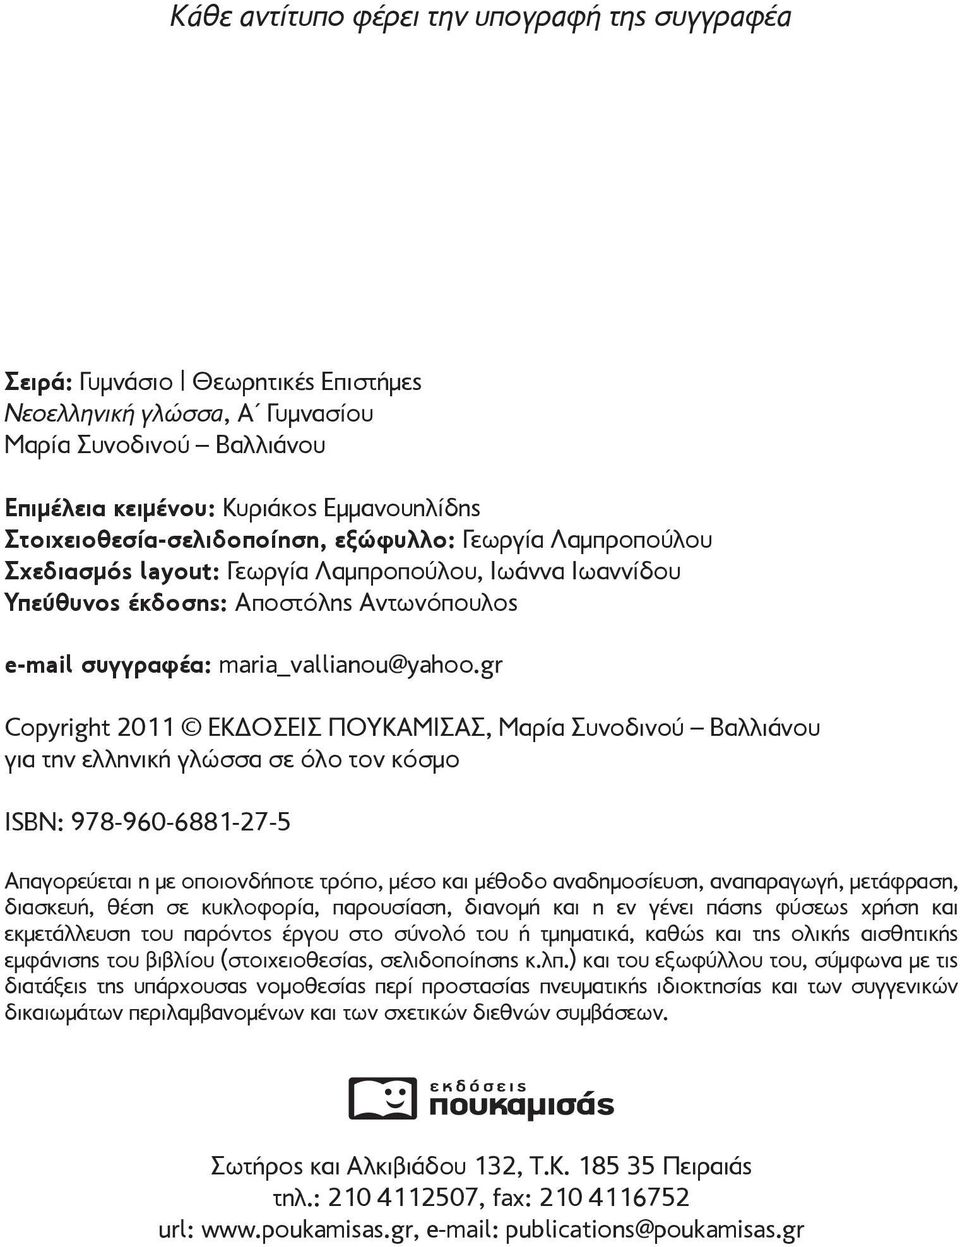 gr Copyright 2011 ΕΚΔΟΣΕΙΣ ΠΟΥΚΑΜΙΣΑΣ, Μαρία Συνοδινού Βαλλιάνου για την ελληνική γλώσσα σε όλο τον κόσμο ISBN: 978-960-6881-27-5 Απαγορεύεται η με οποιονδήποτε τρόπο, μέσο και μέθοδο αναδημοσίευση,